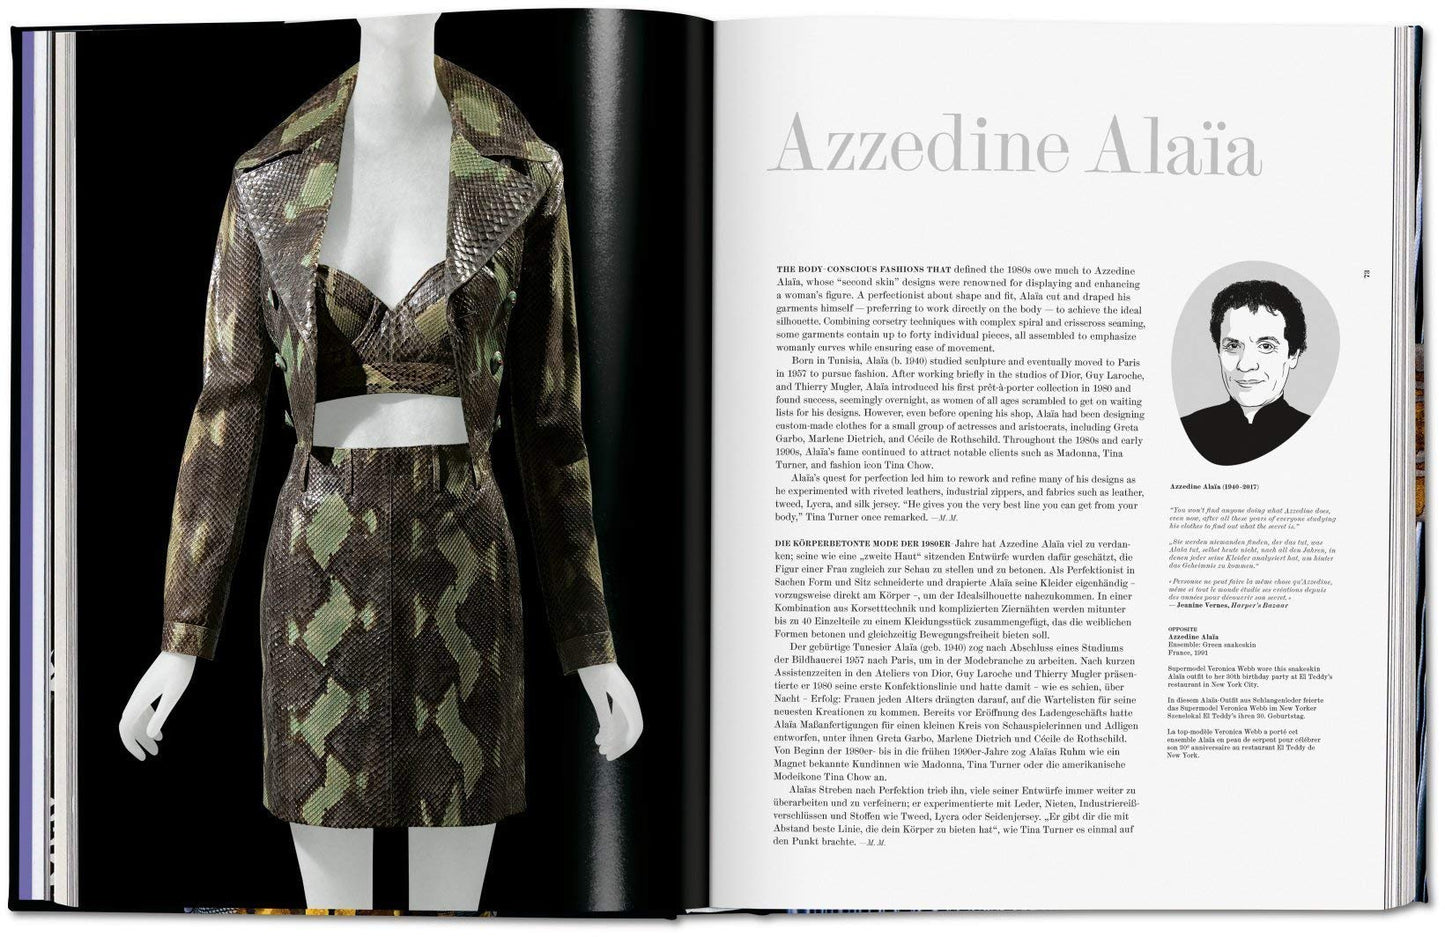 Fashion Designers A-Z - Valerie Steele